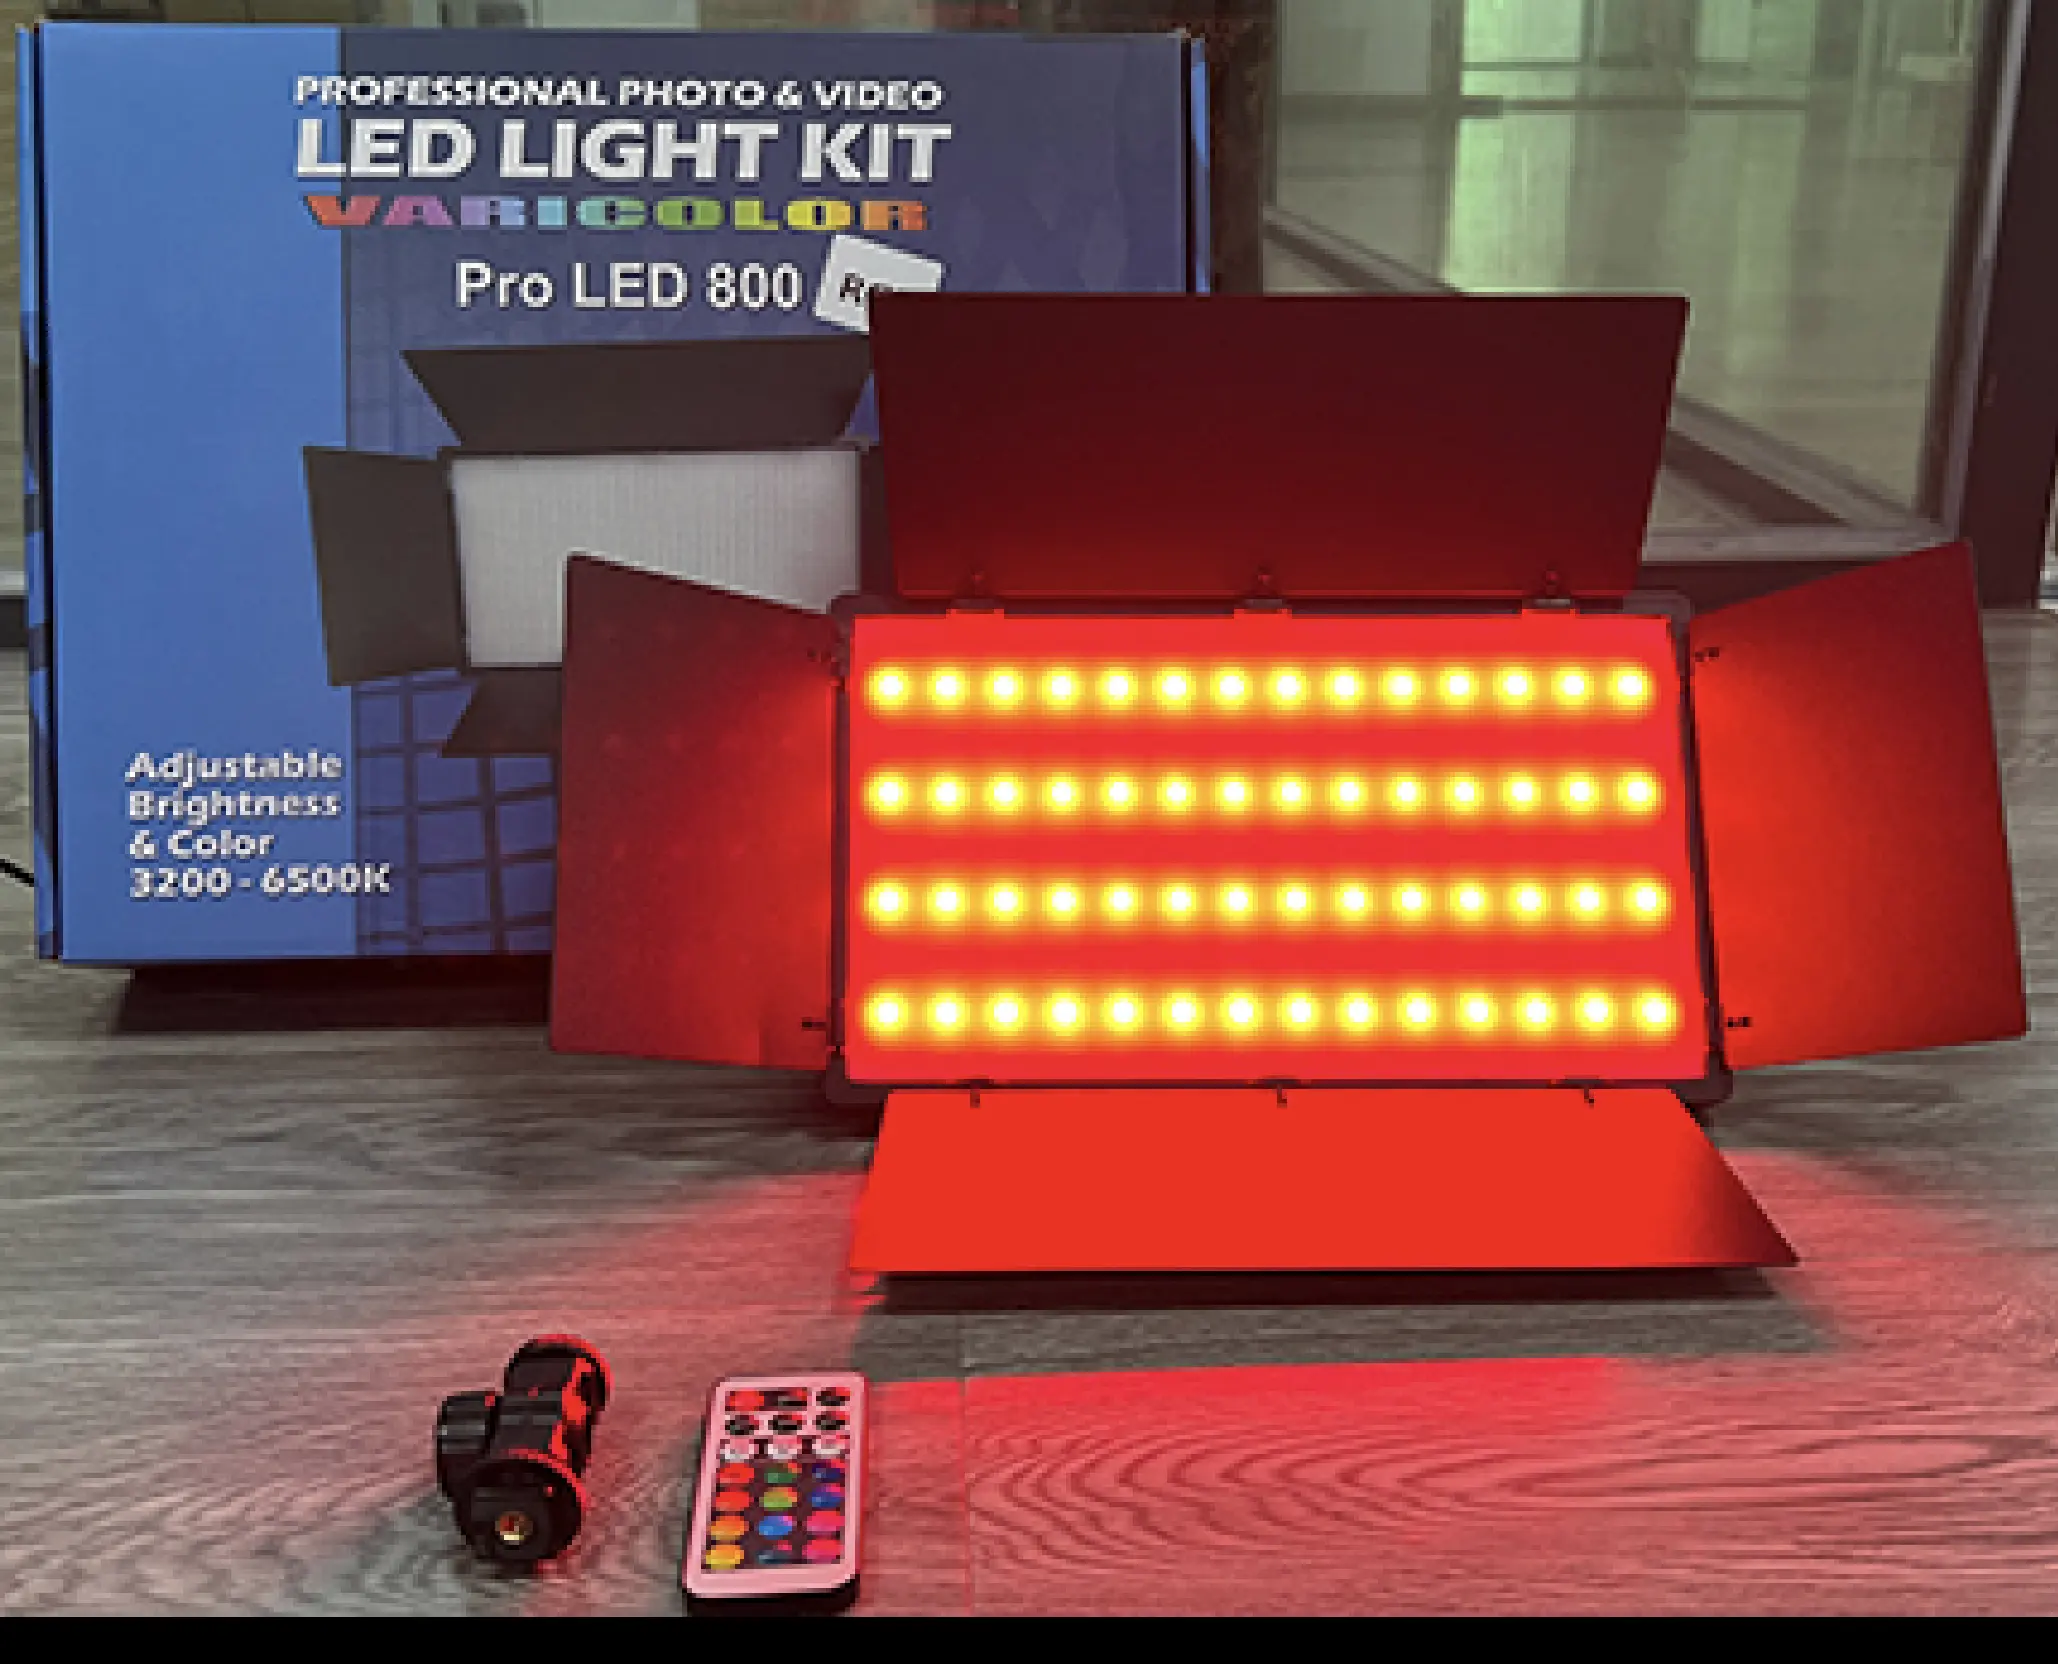 Caliente nueva venta E600 RGB LED cámara auxiliar relleno panel luz LED estudio Dslr fotografía video iluminación lámpara iluminación